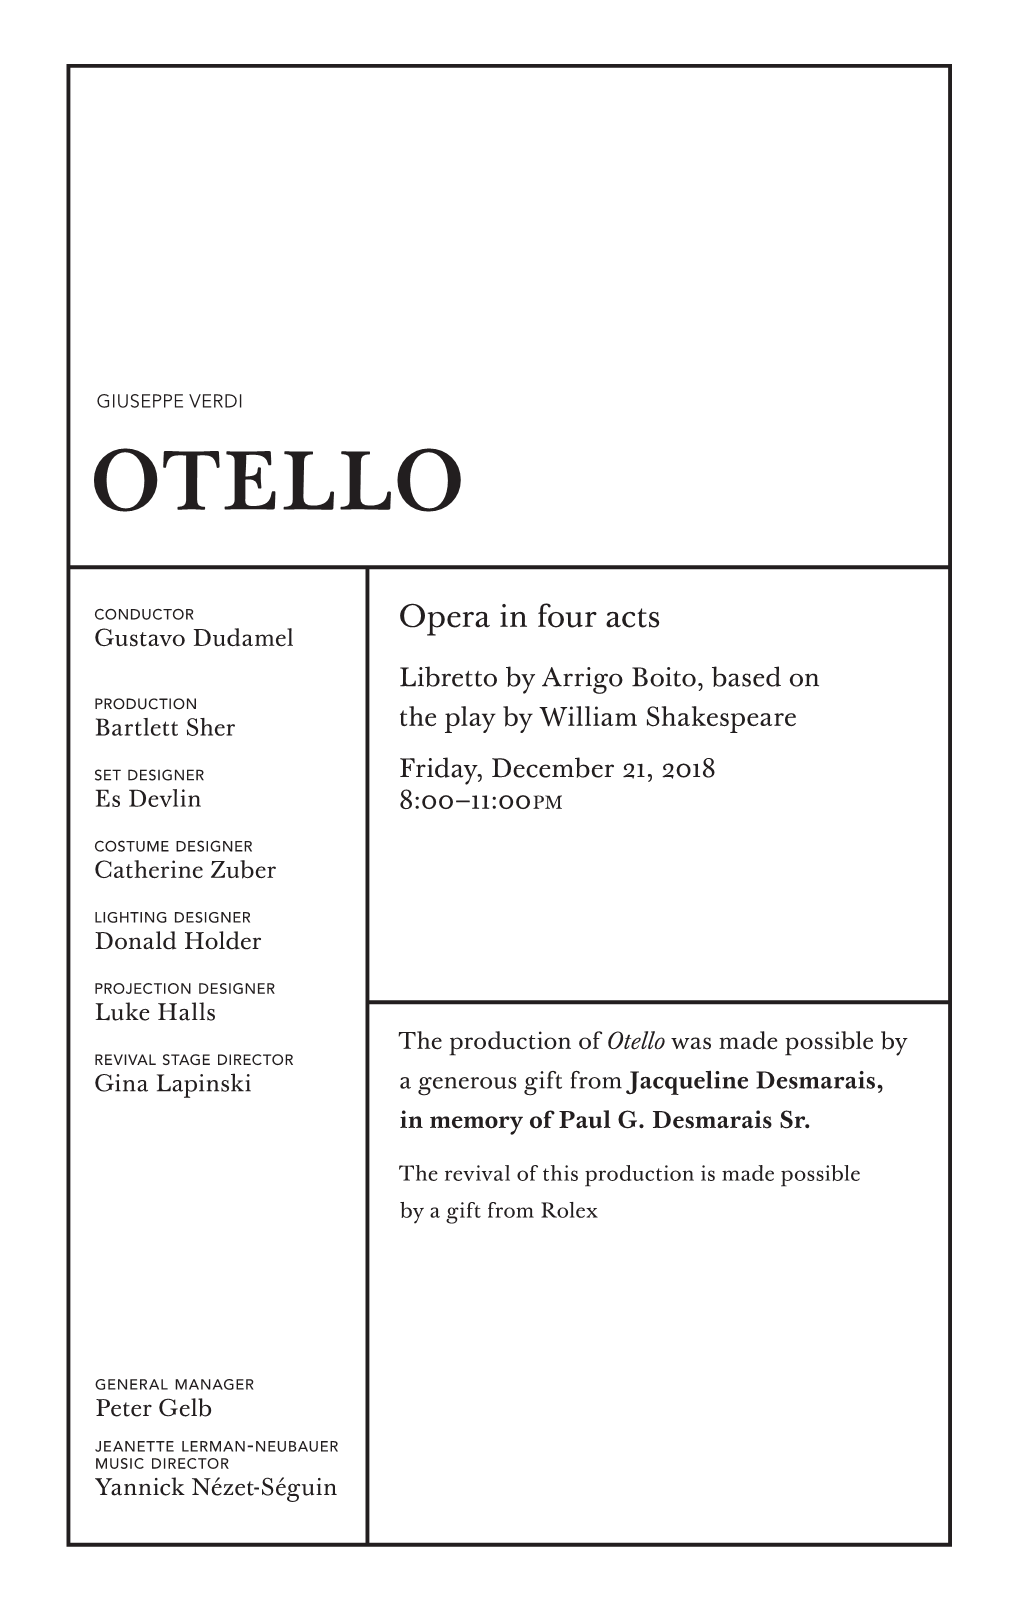 12-21-2018 Otello Eve.Indd